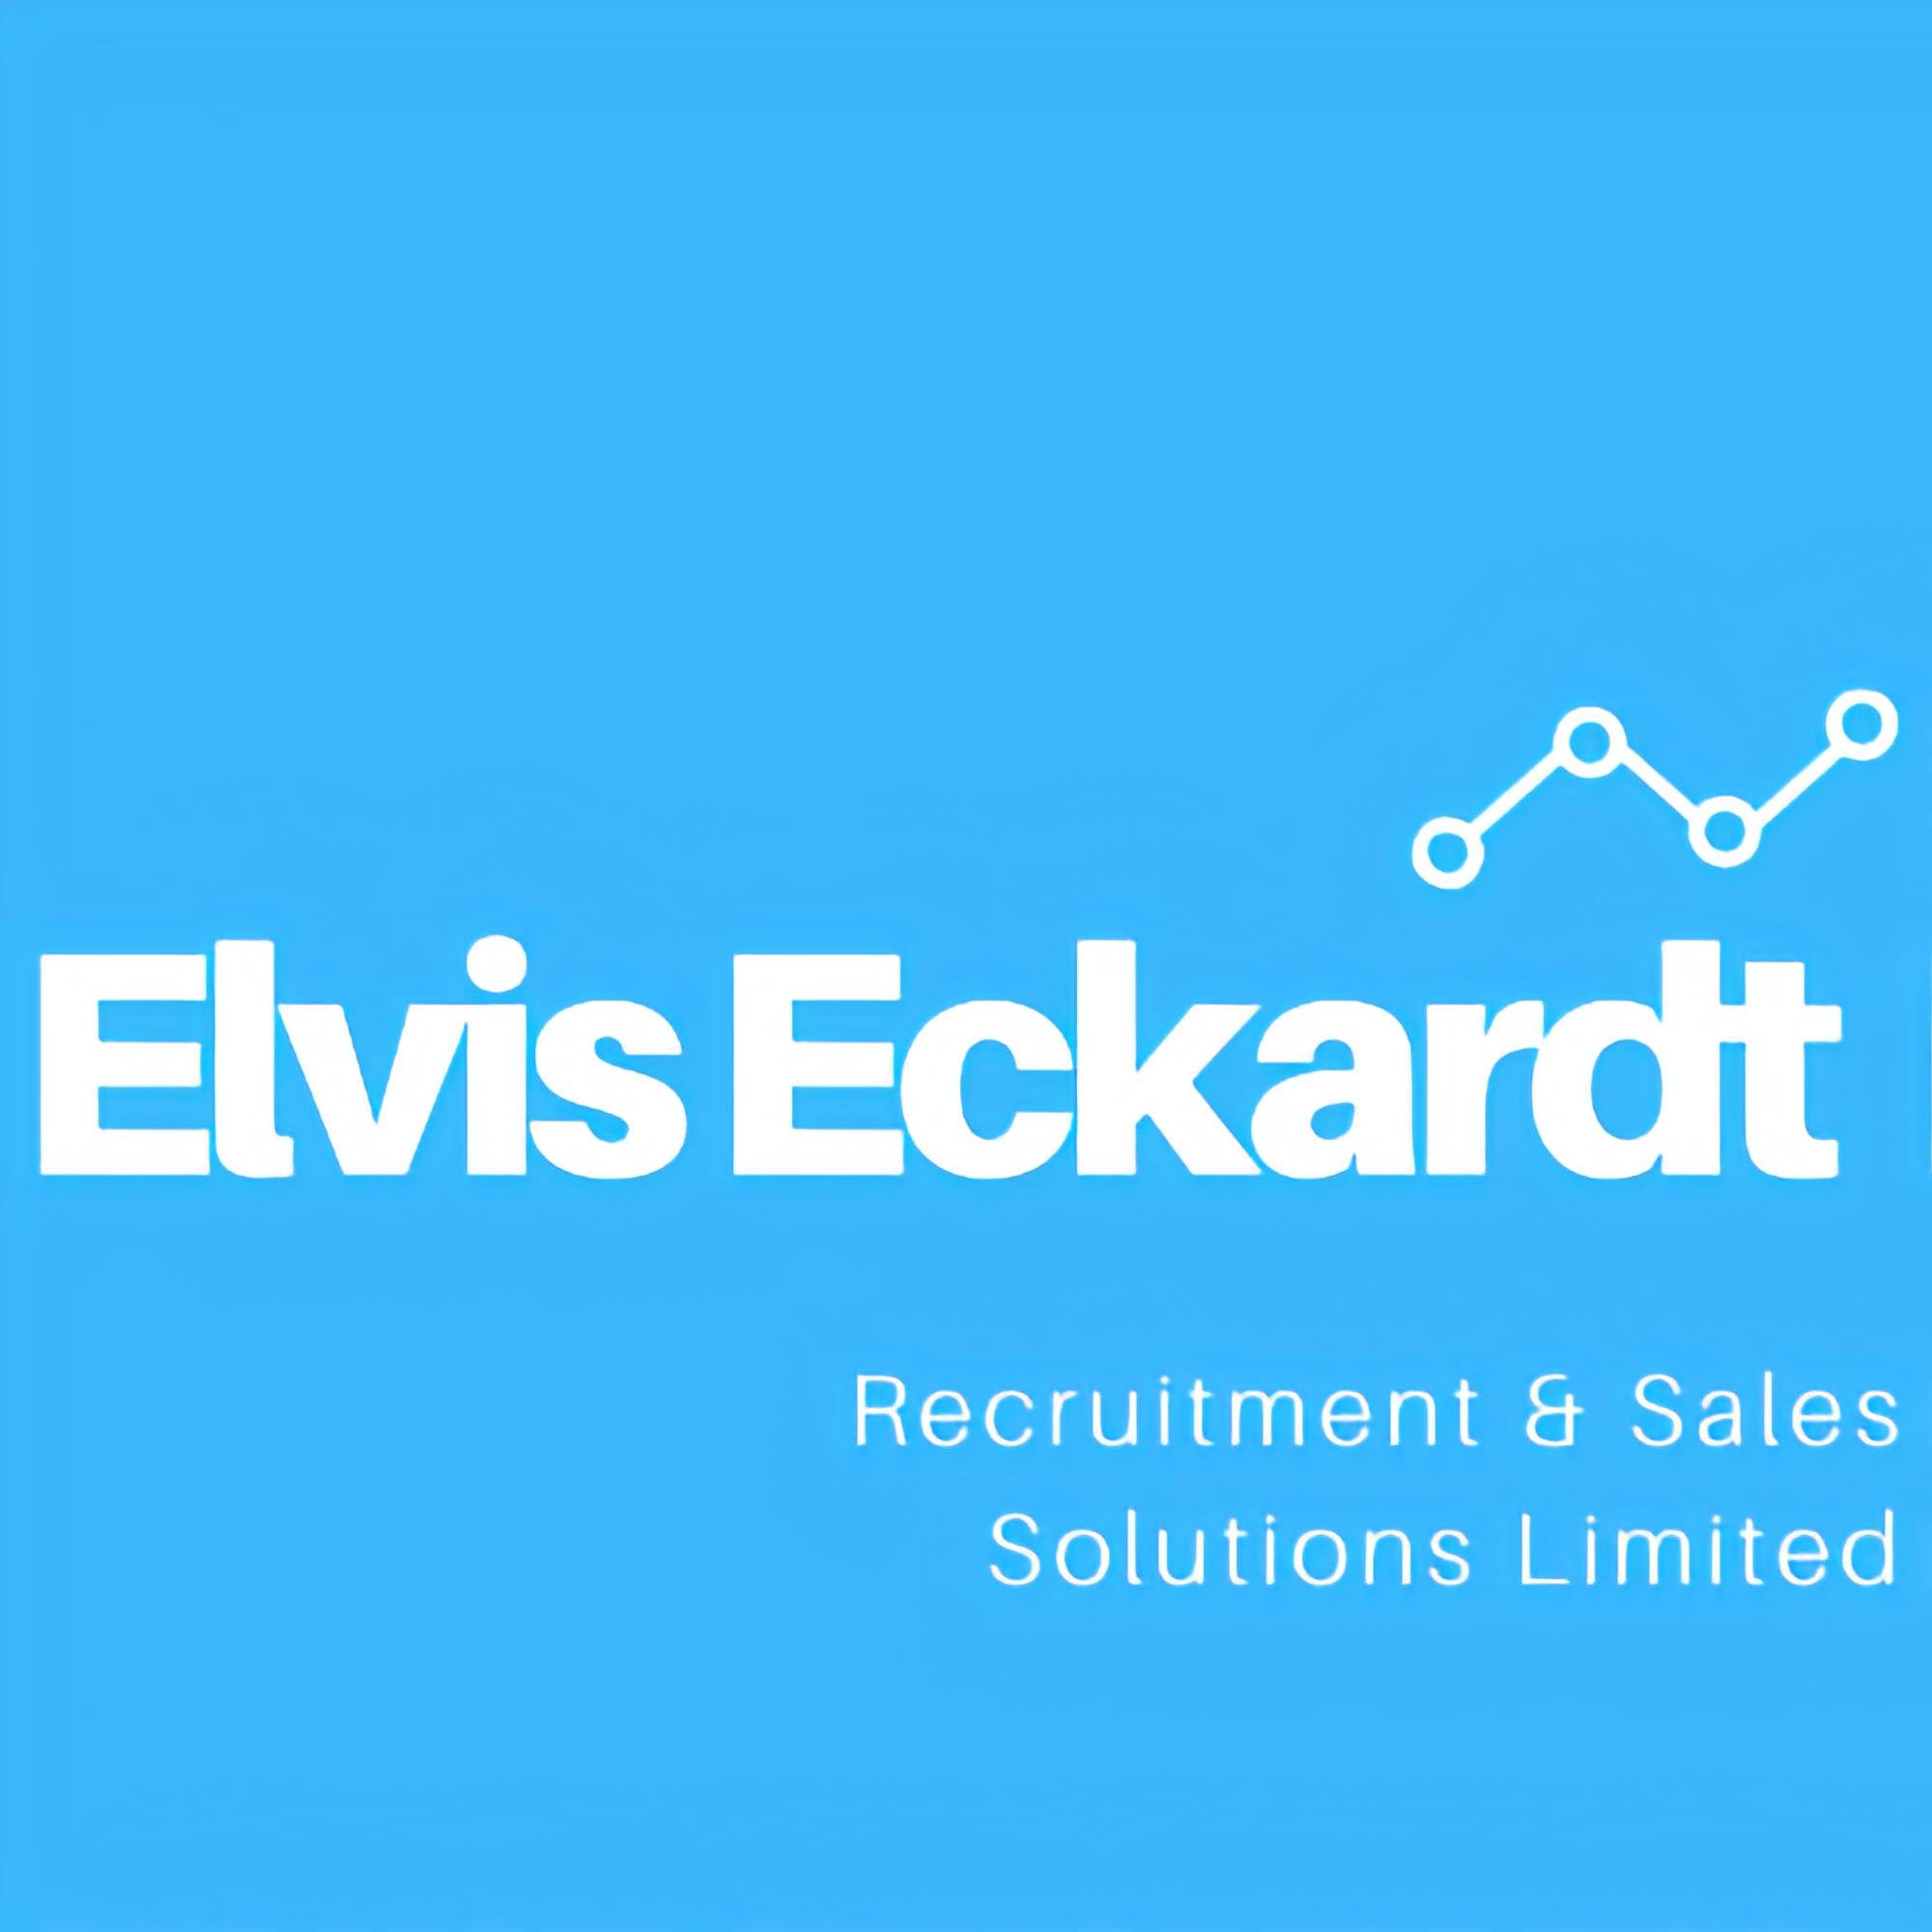 Elvis Eckardt Recruitment & Sales Solutions Limited